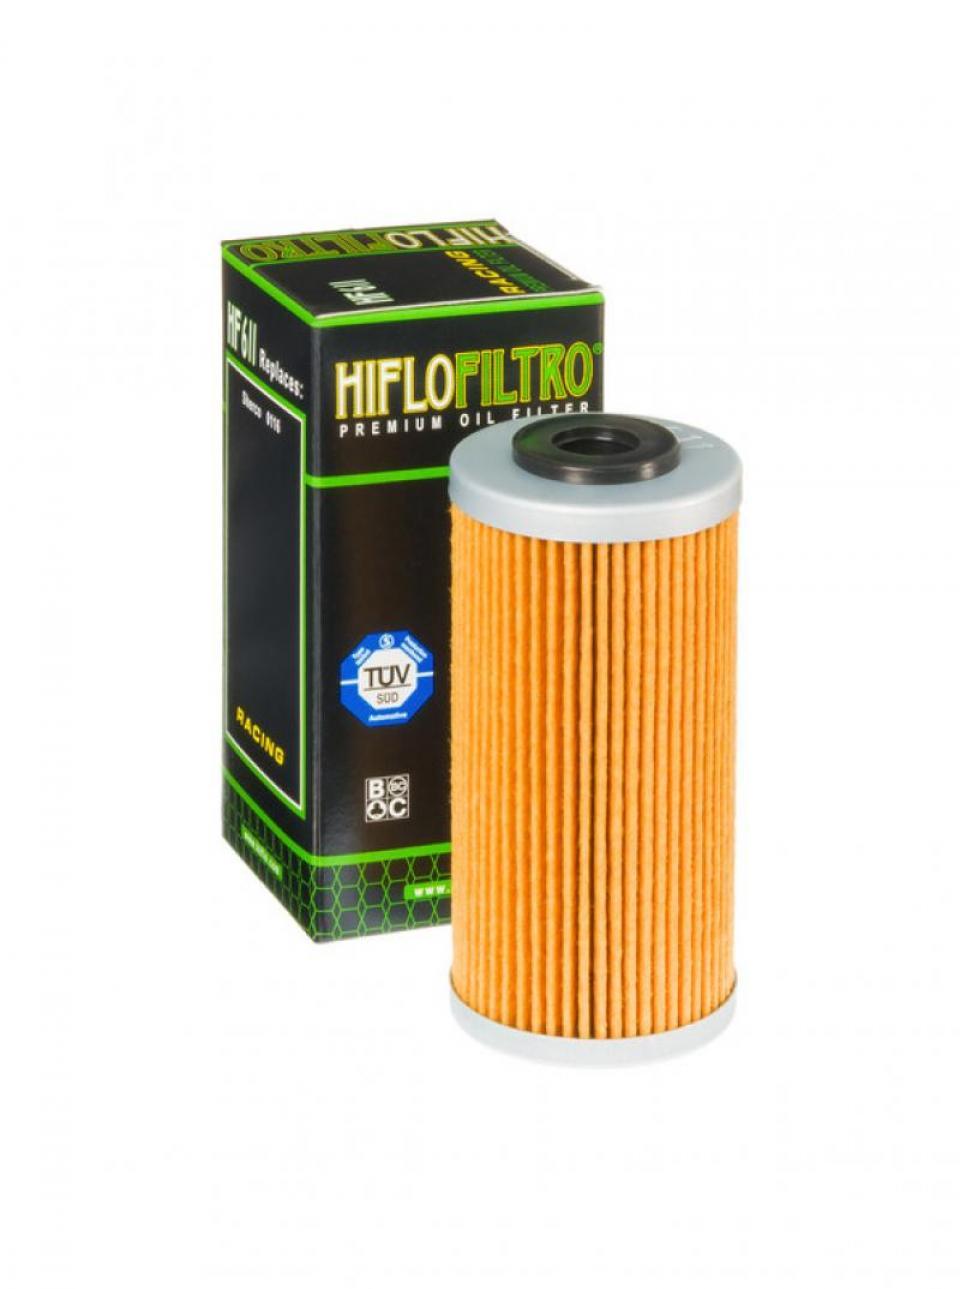 Filtre à huile Hiflo Filtro pour Moto SHERCO 510 Se 5.1 I F 4T Enduro 2007-2011 Neuf